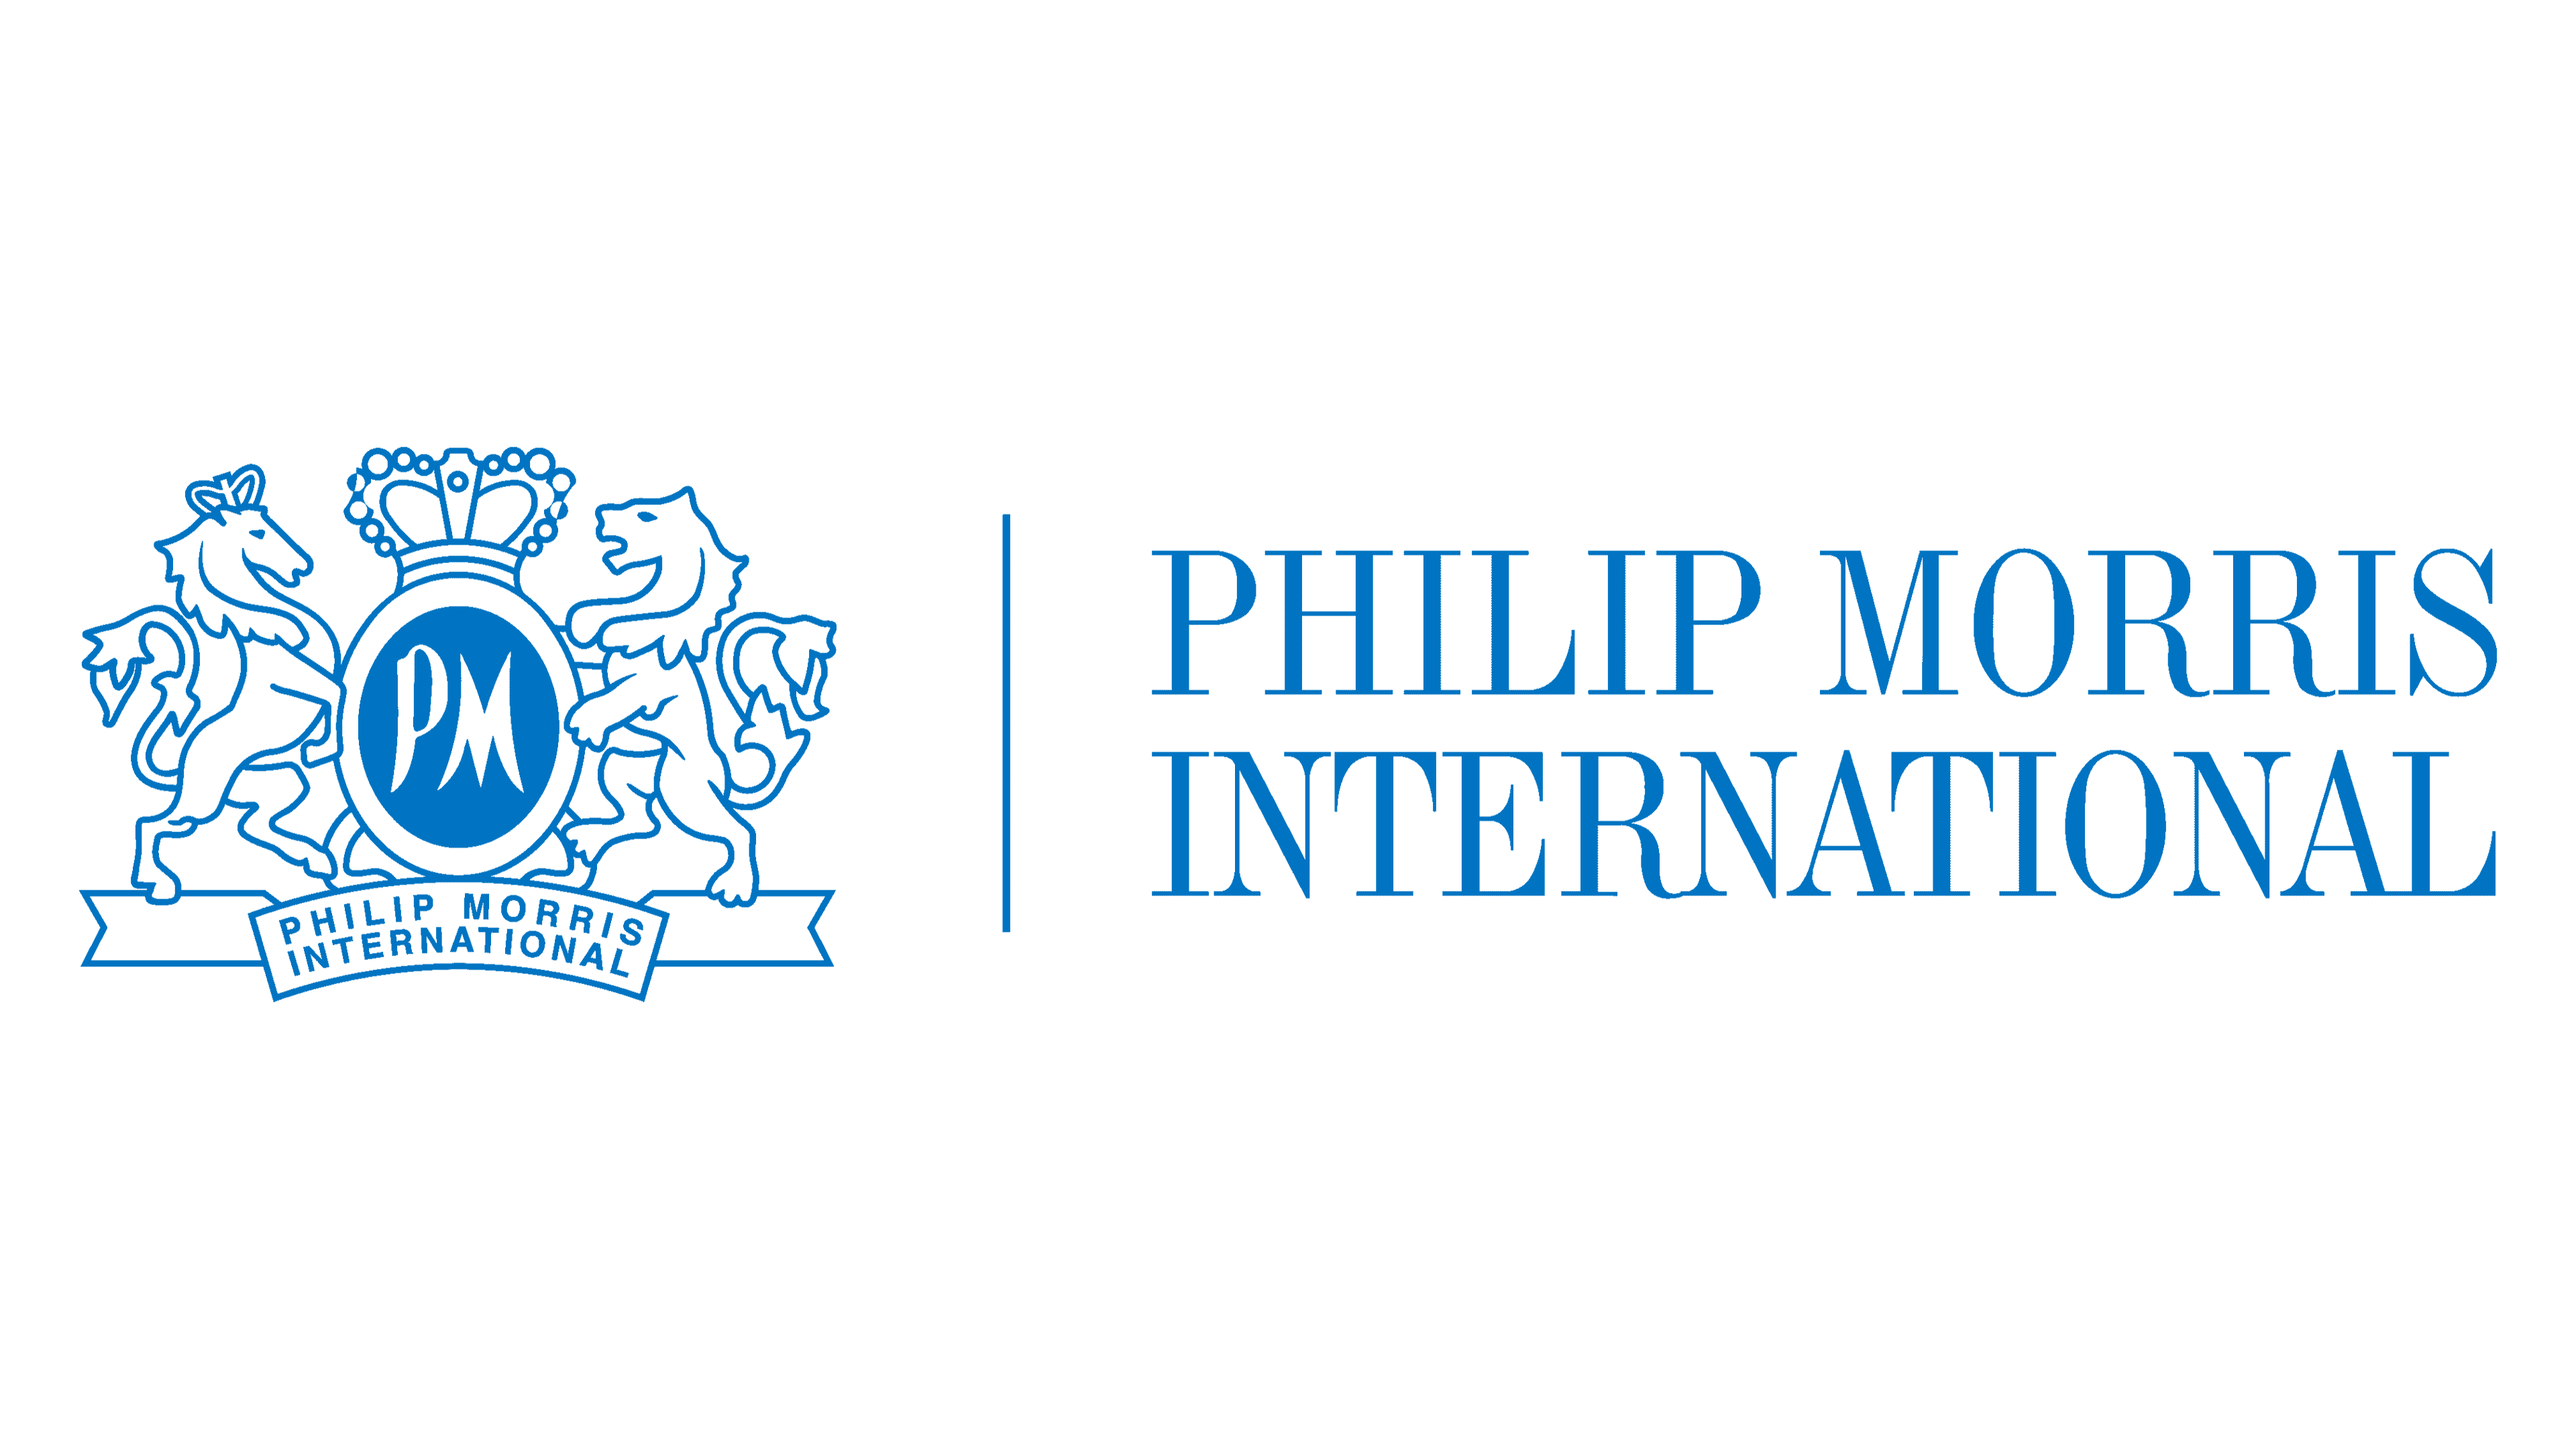 Сайт филип моррис. Филлип Моррис значок. Philip Morris International в России. Philip Morris International логотип. Филип Моррис Украина.